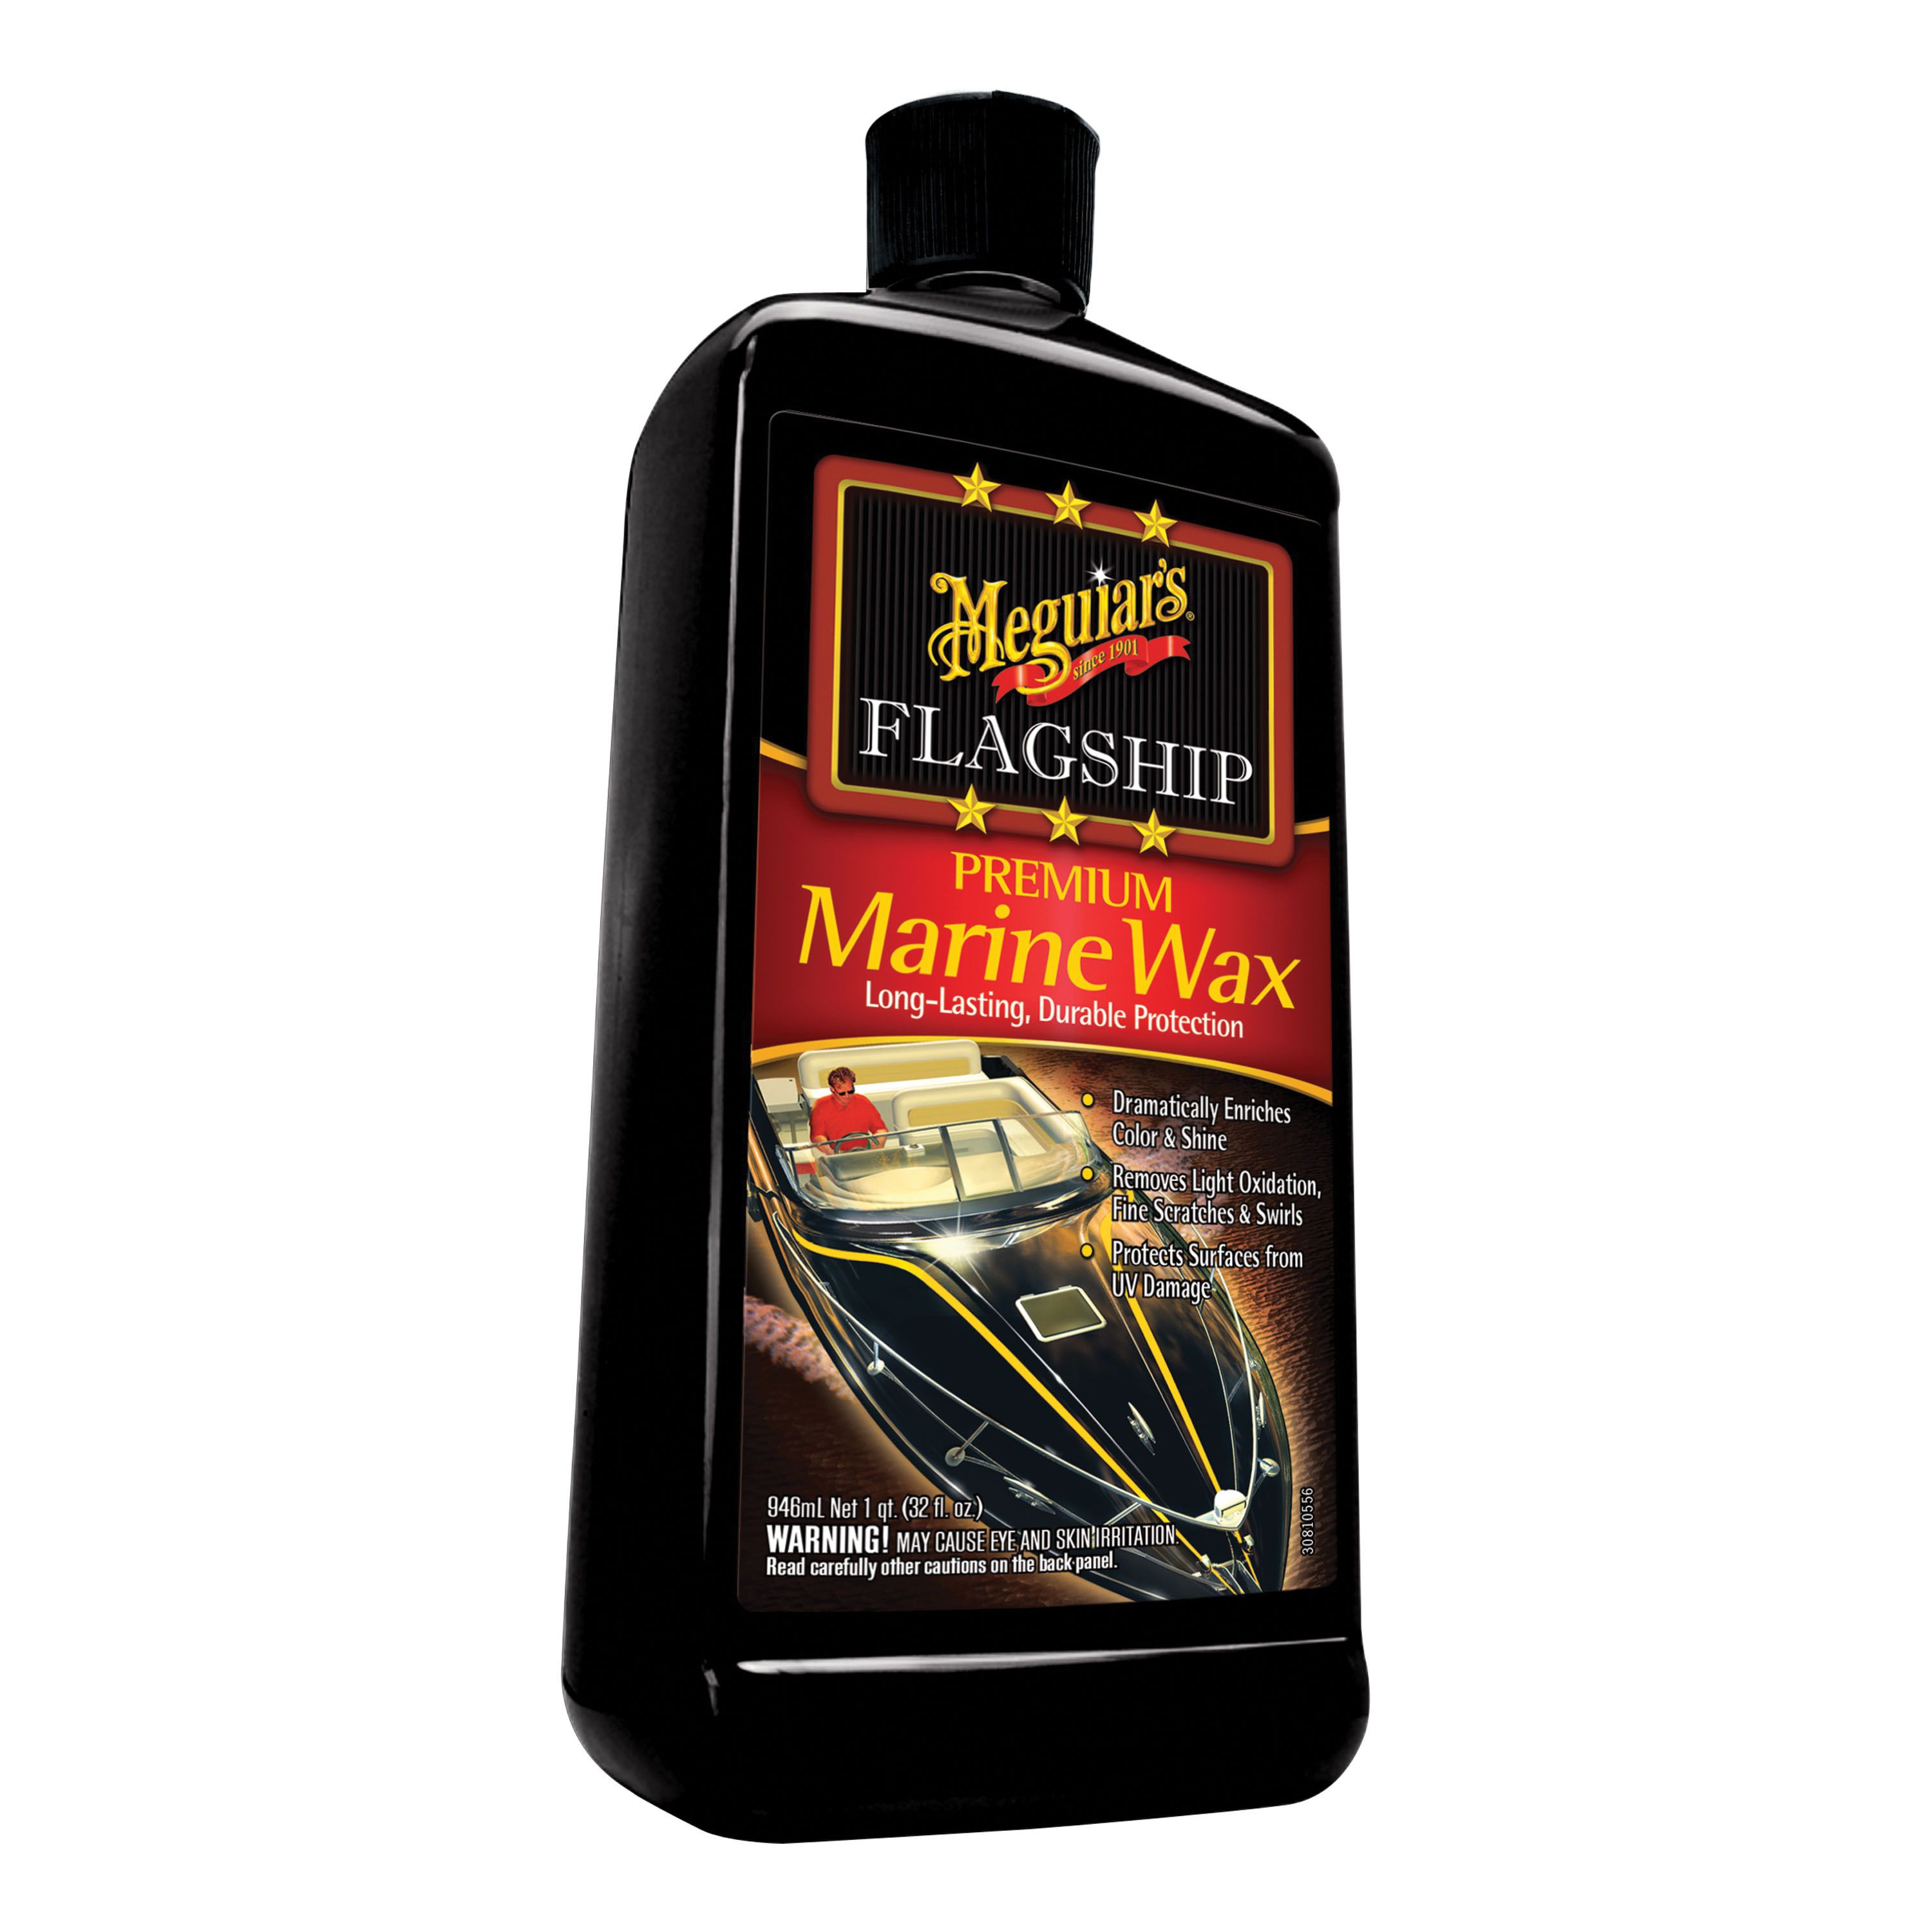 Meguiar's Flagship Premium Marine Wax - 32 fl oz bottle